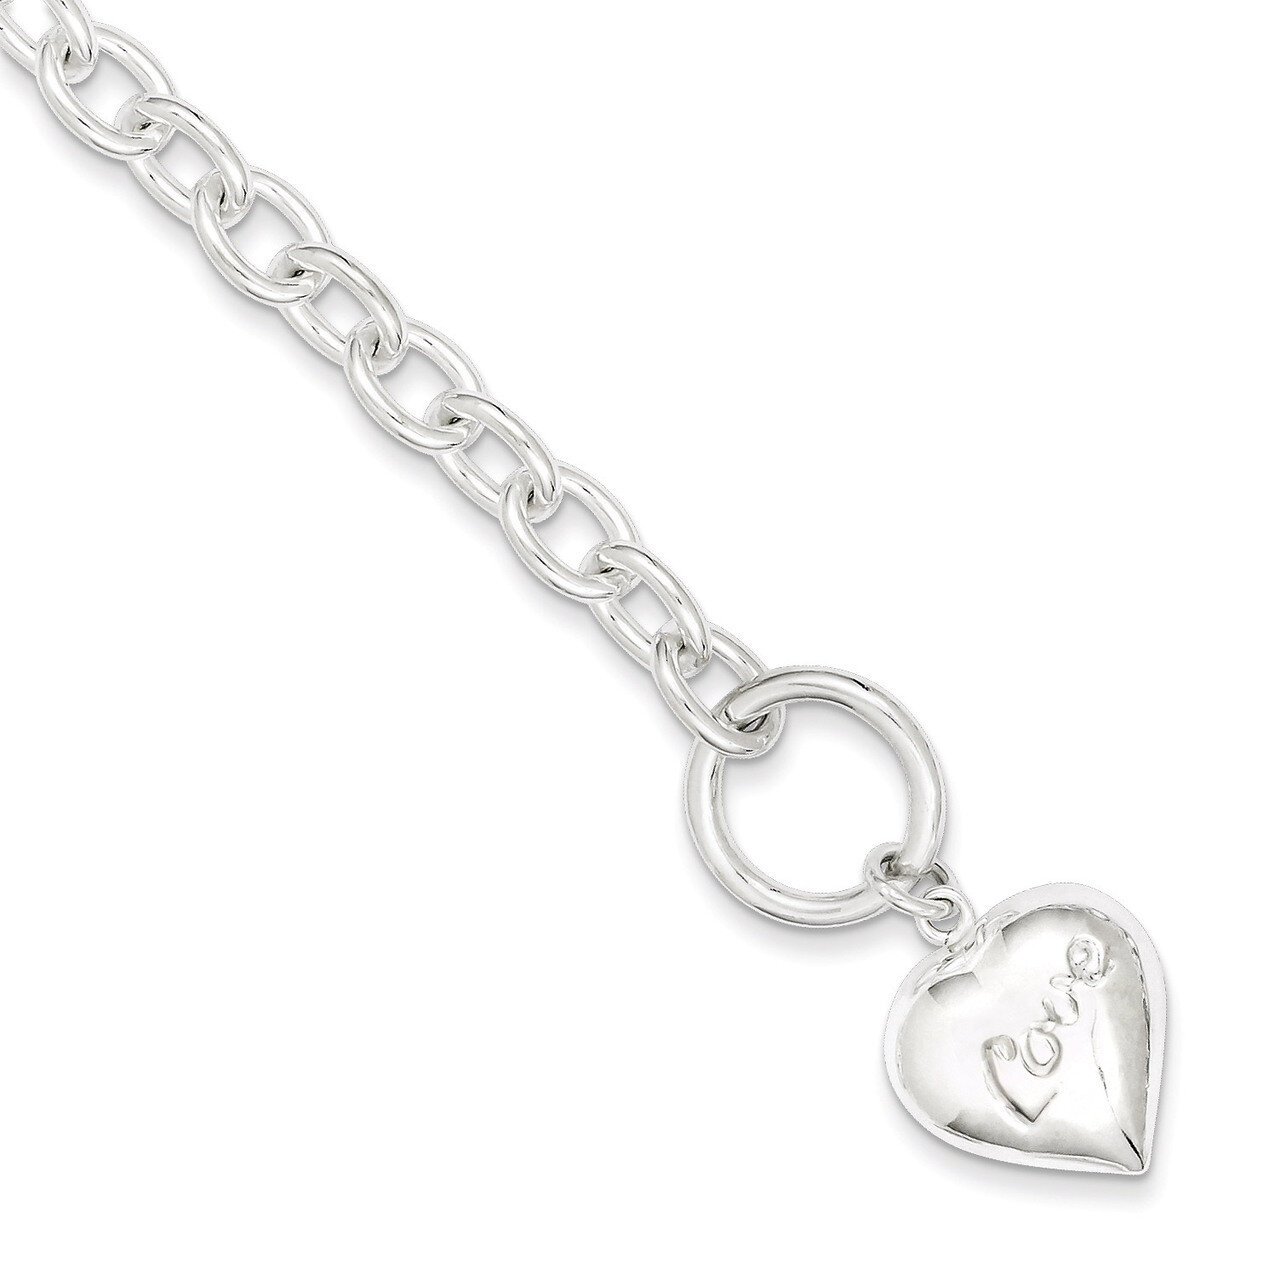 7.5 Inch Puffed Heart Charm Bracelet Sterling Silver QG1480-7.5